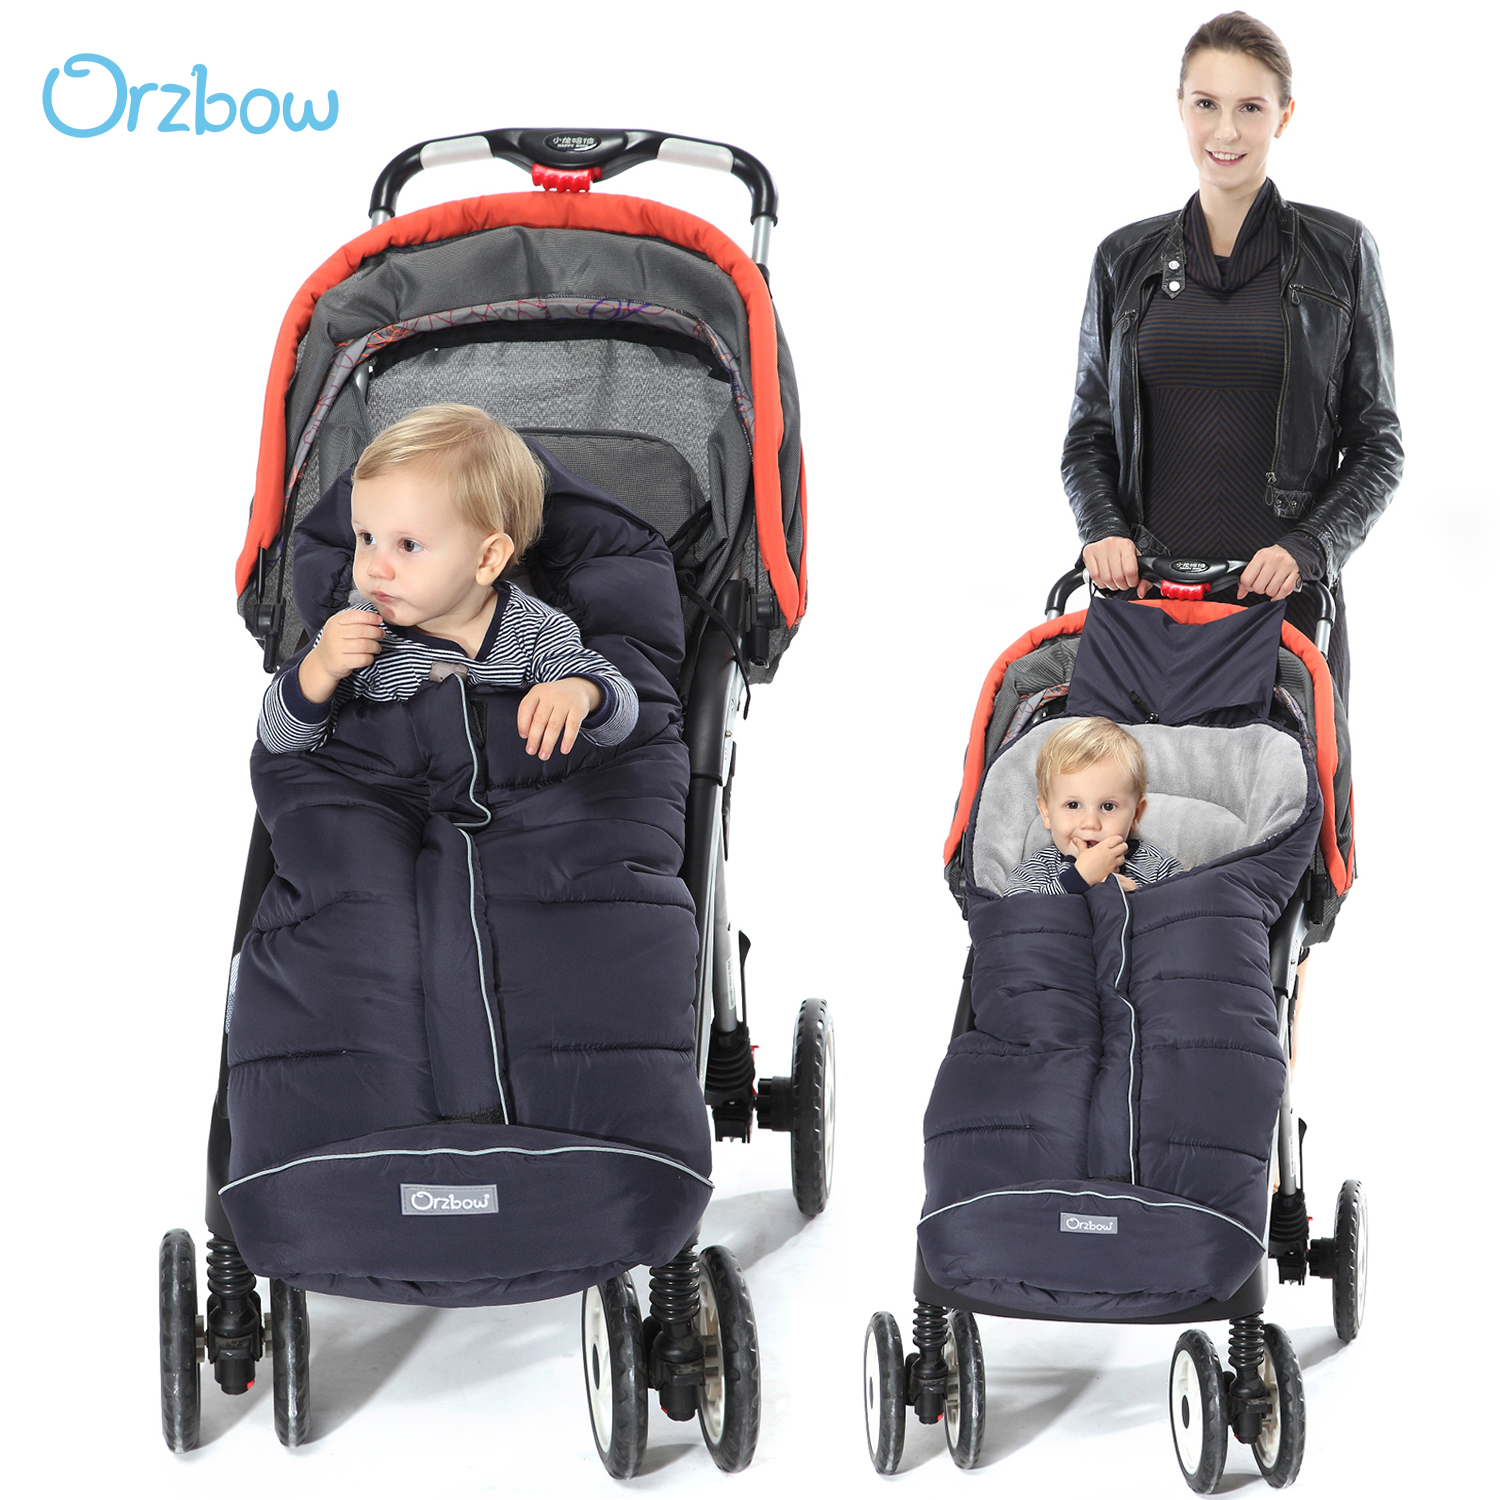 Baby Footmuff Fits Universal Strollers,Waterproof and breathable detachable winter stroller bag Multifunction Sleeping bag 35X19in 